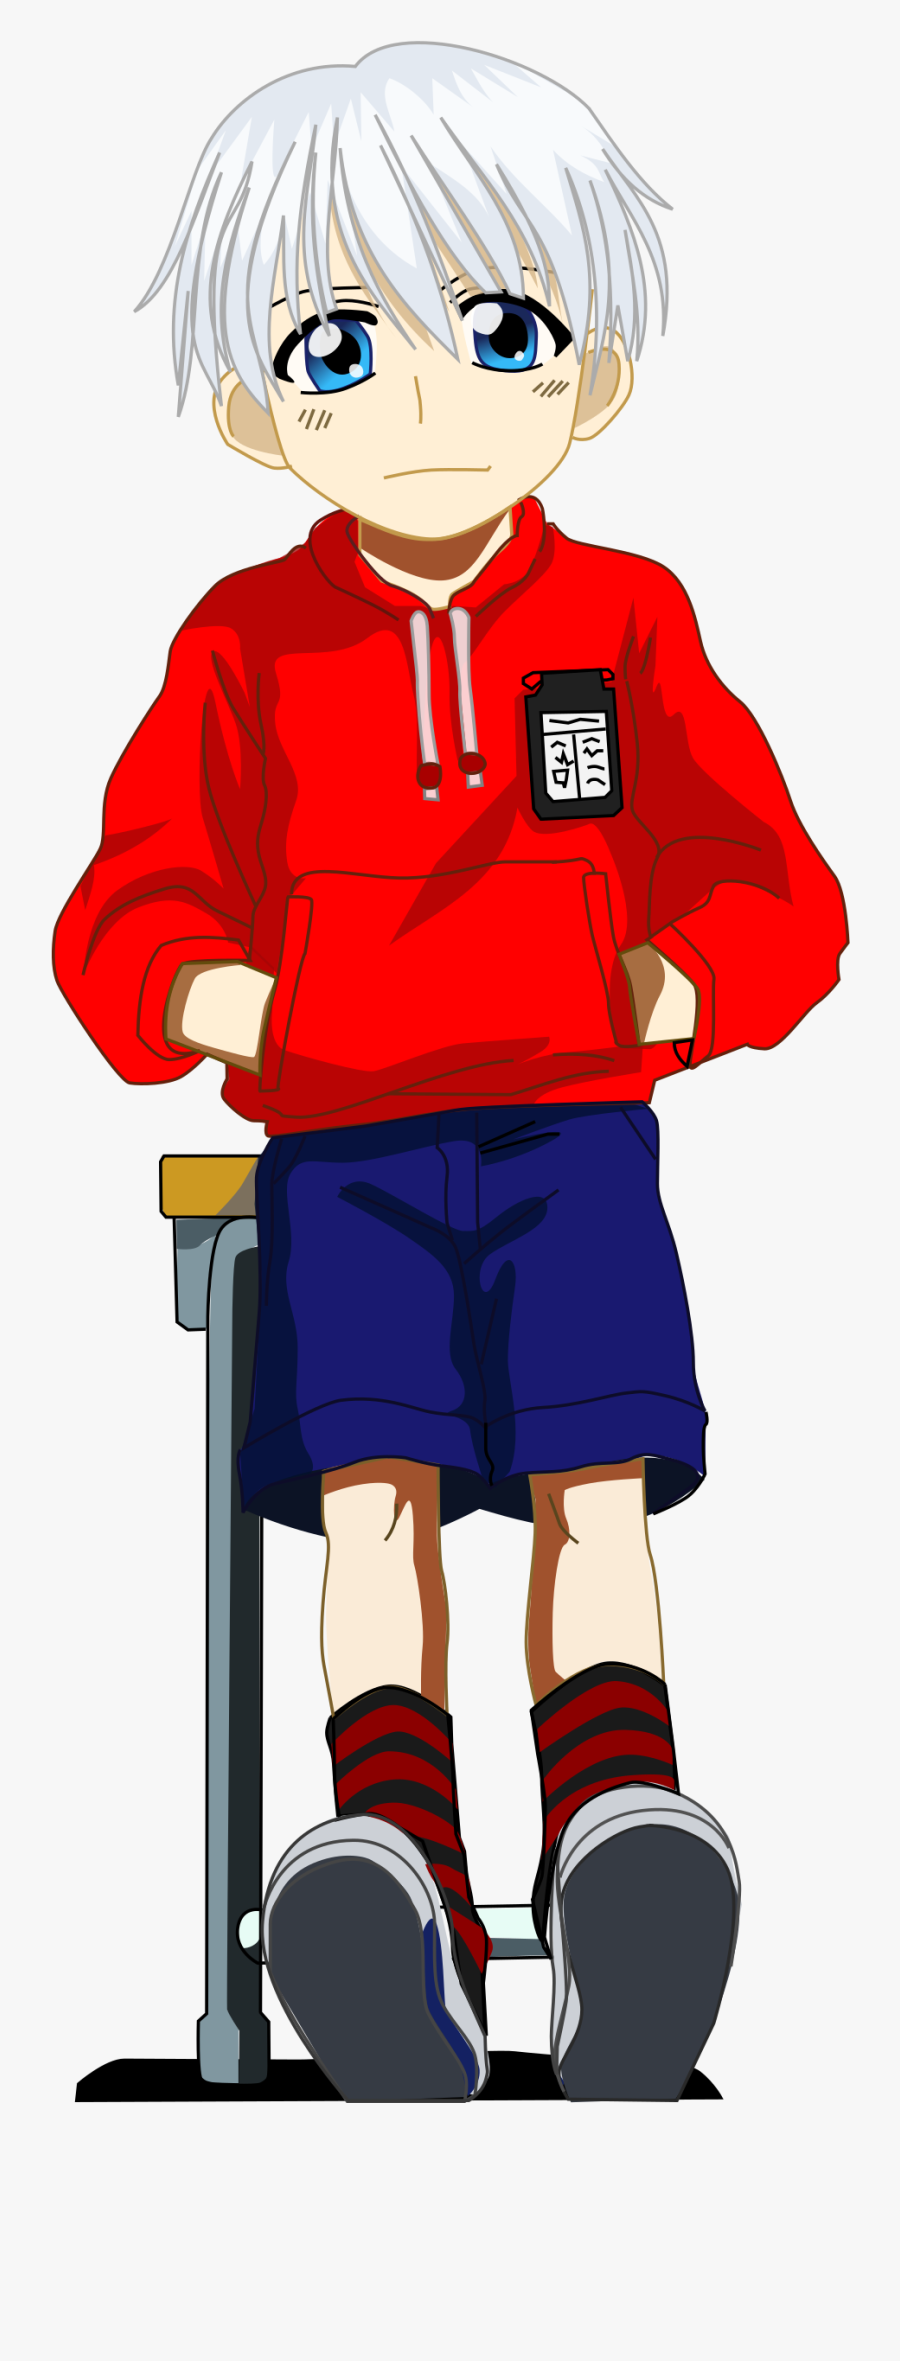 Manga School Big Image - Anime School Boy Png, Transparent Clipart